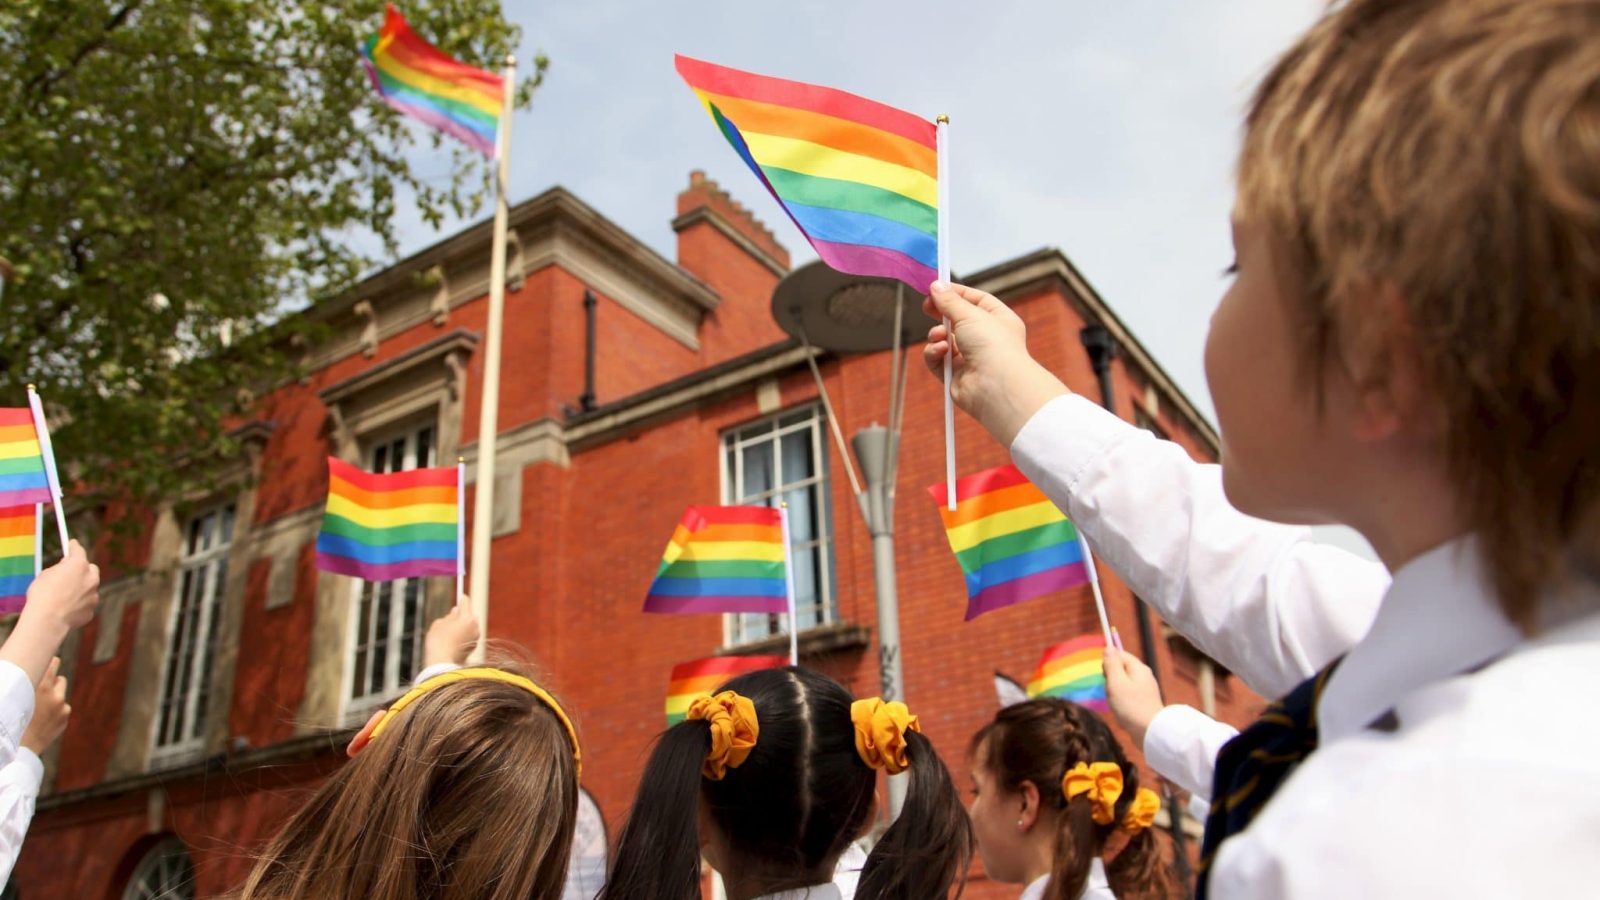 Pride in Trafford - Flag Raising.
Image: Jason Lock